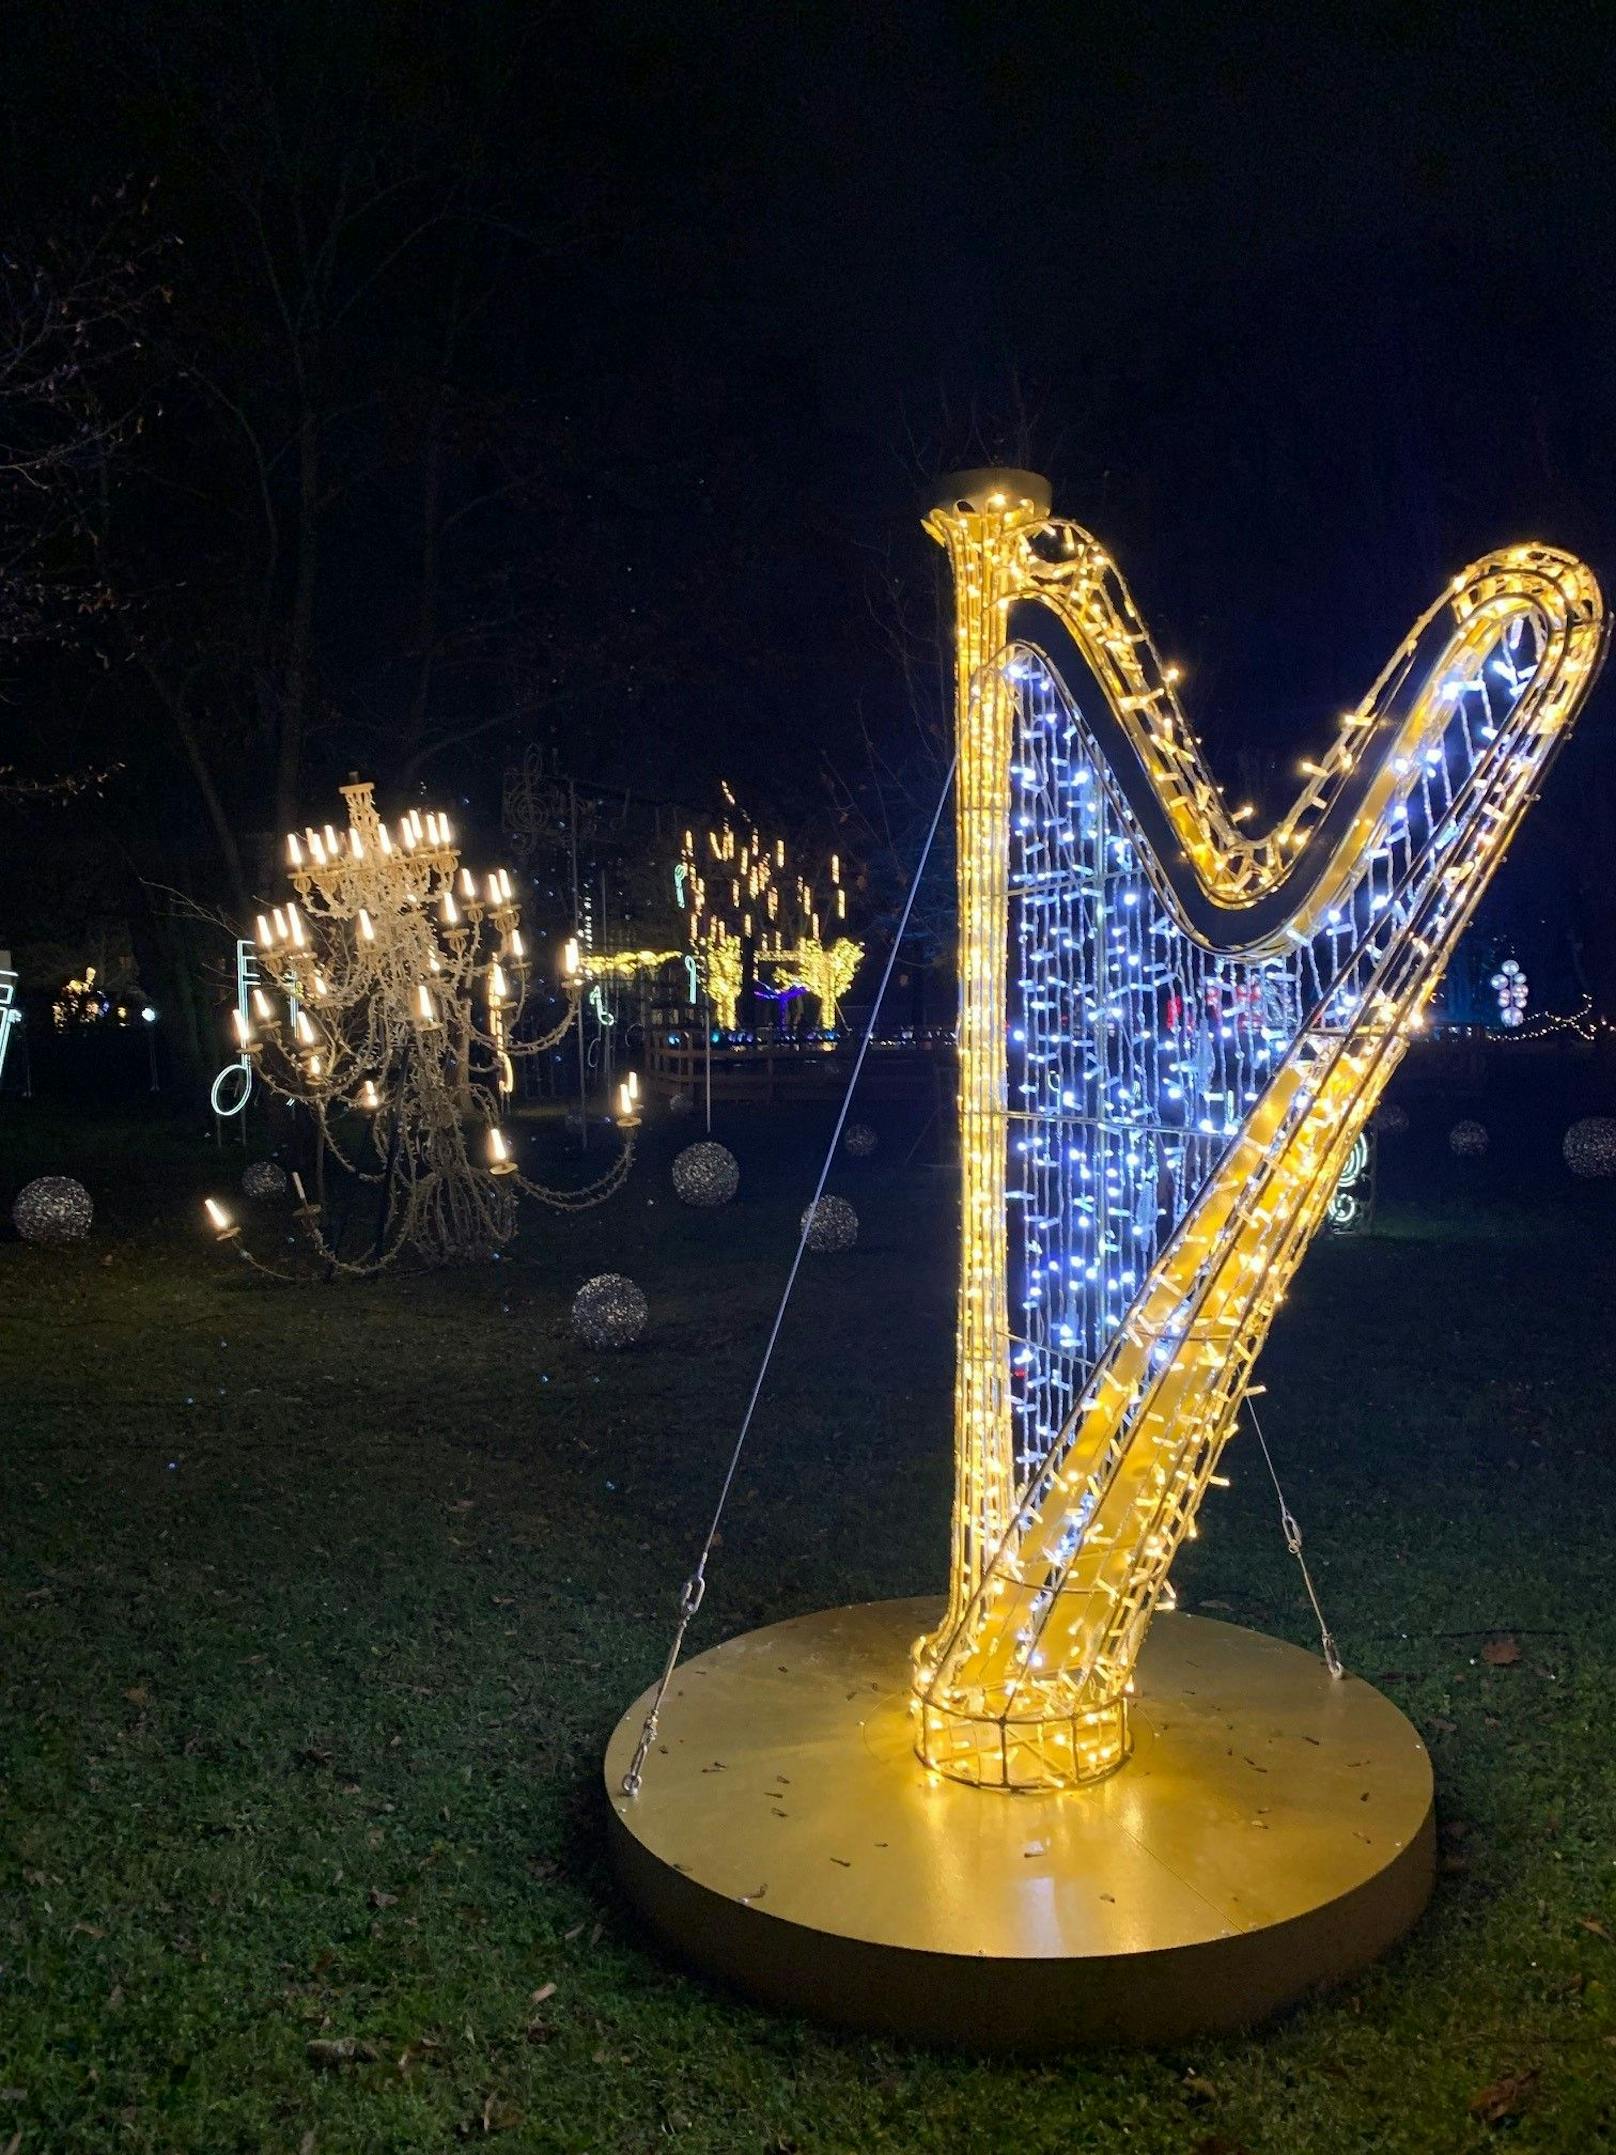 LUMAGICA: Der weltberühmte magische Lichterpark kommt erstmals nach Wien.